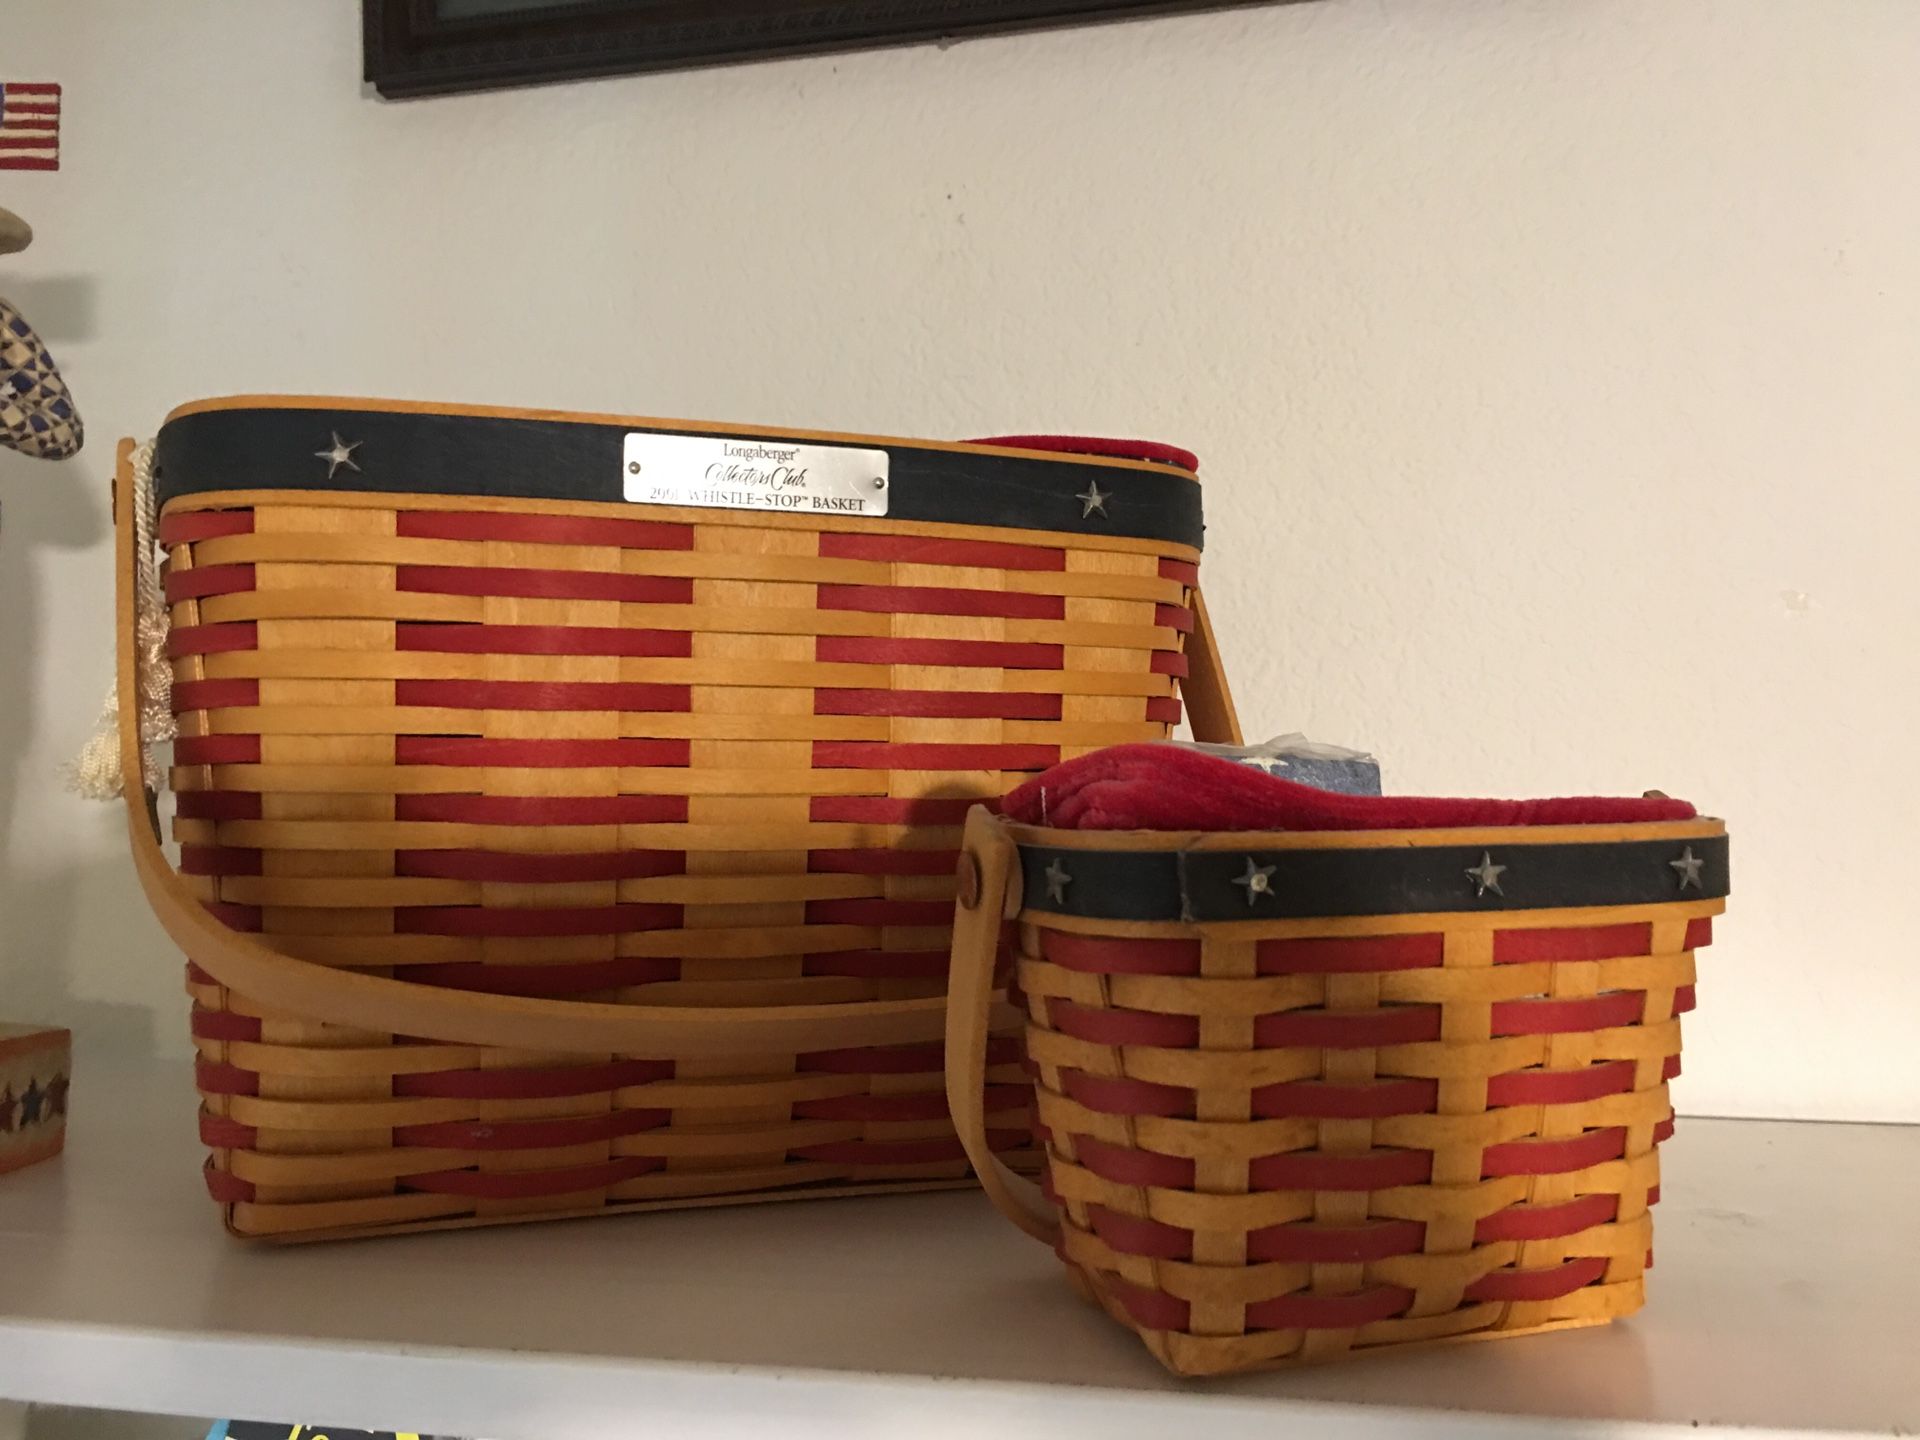 Longaberger collector baskets